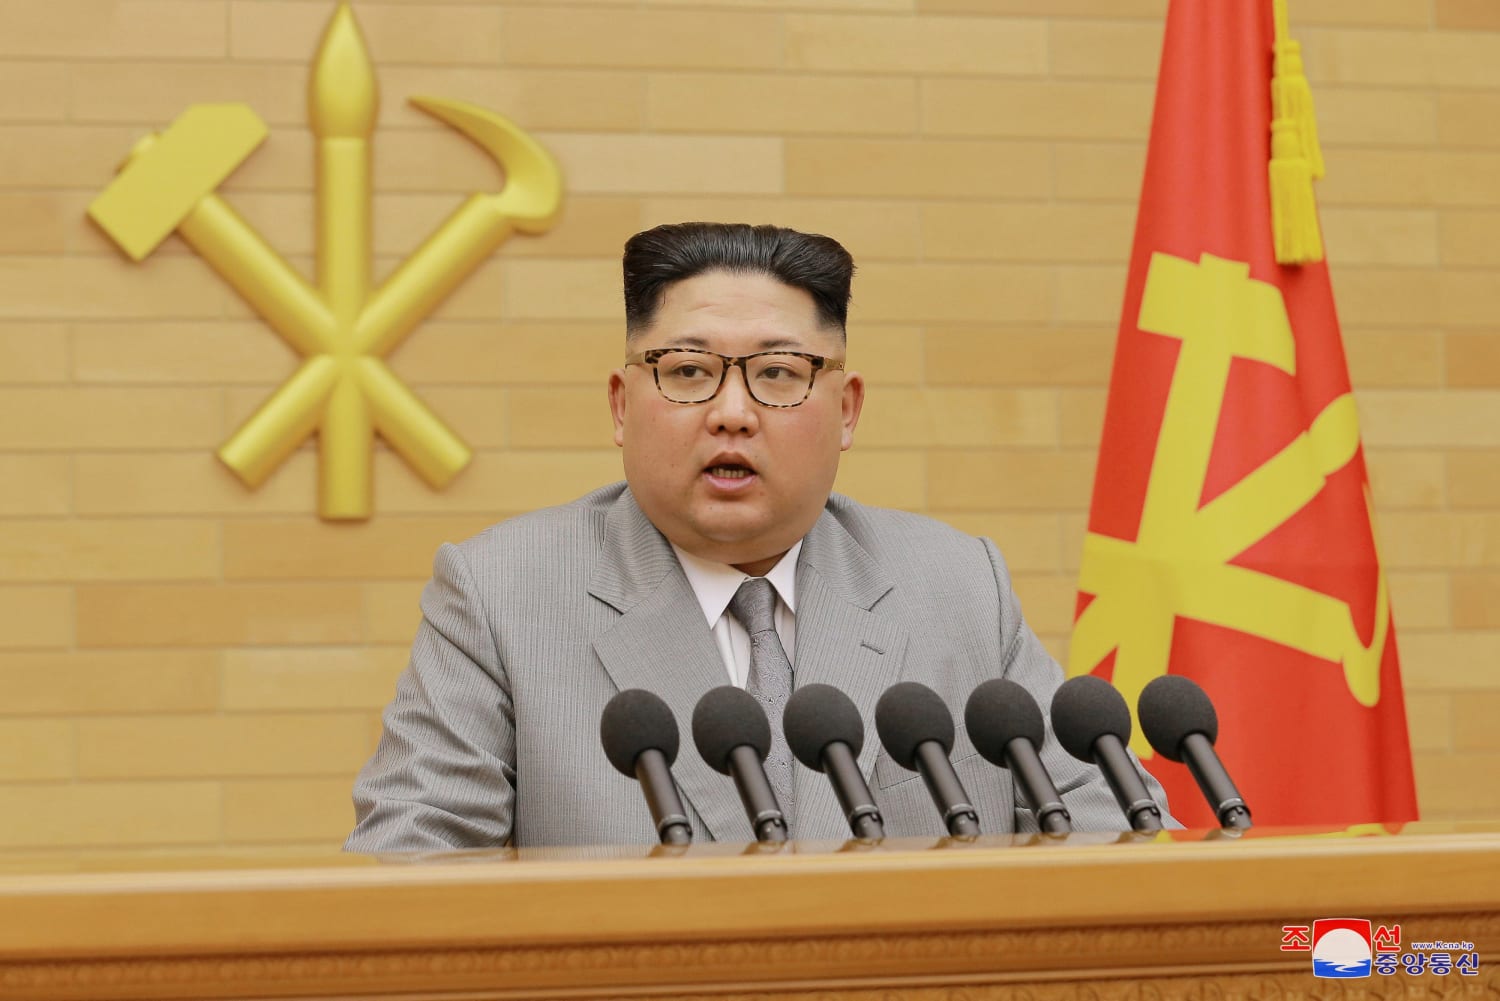 kim jong un highlights his 'nuclear button,' offers olympic talks